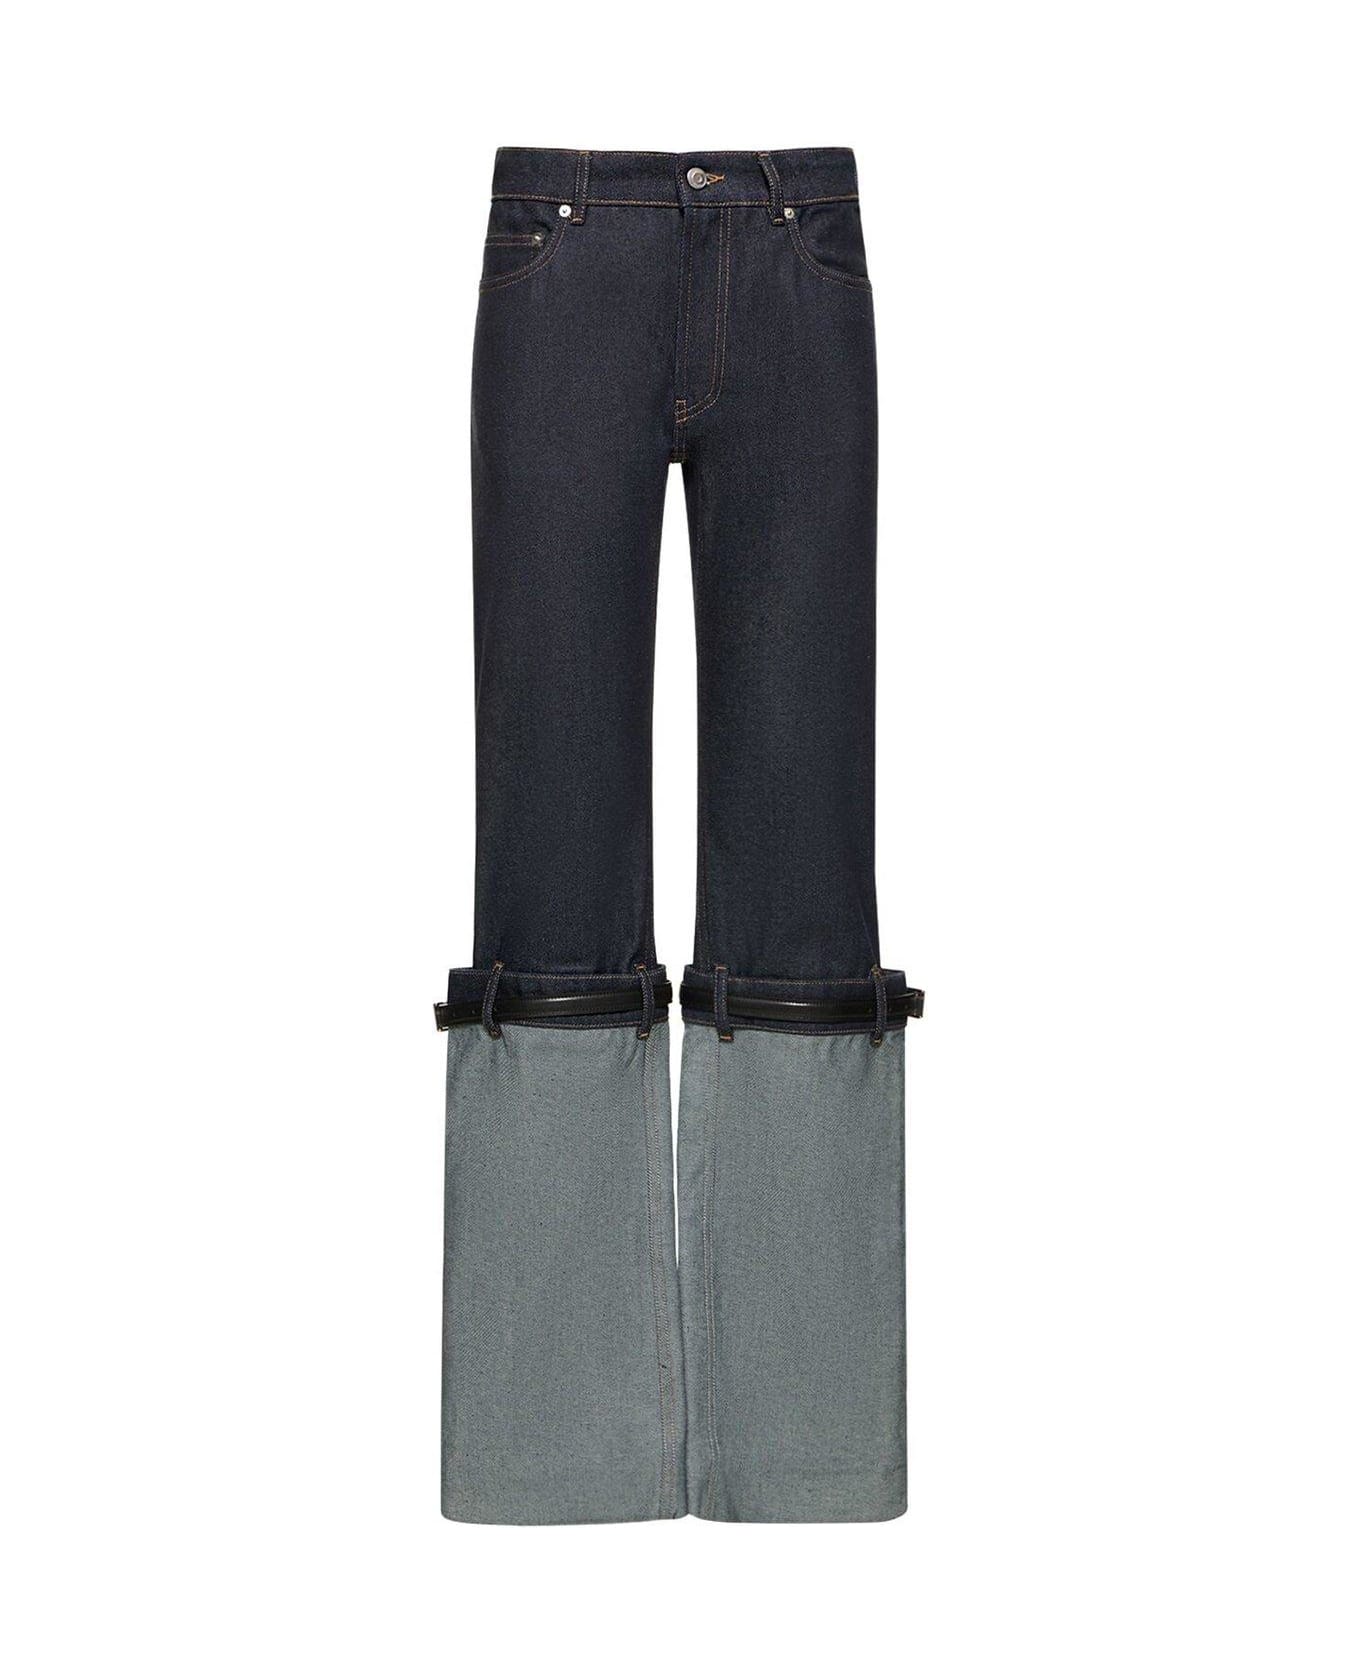 Coperni Hybrid Turn-up Detail Jeans Jeans - DARK NAVY